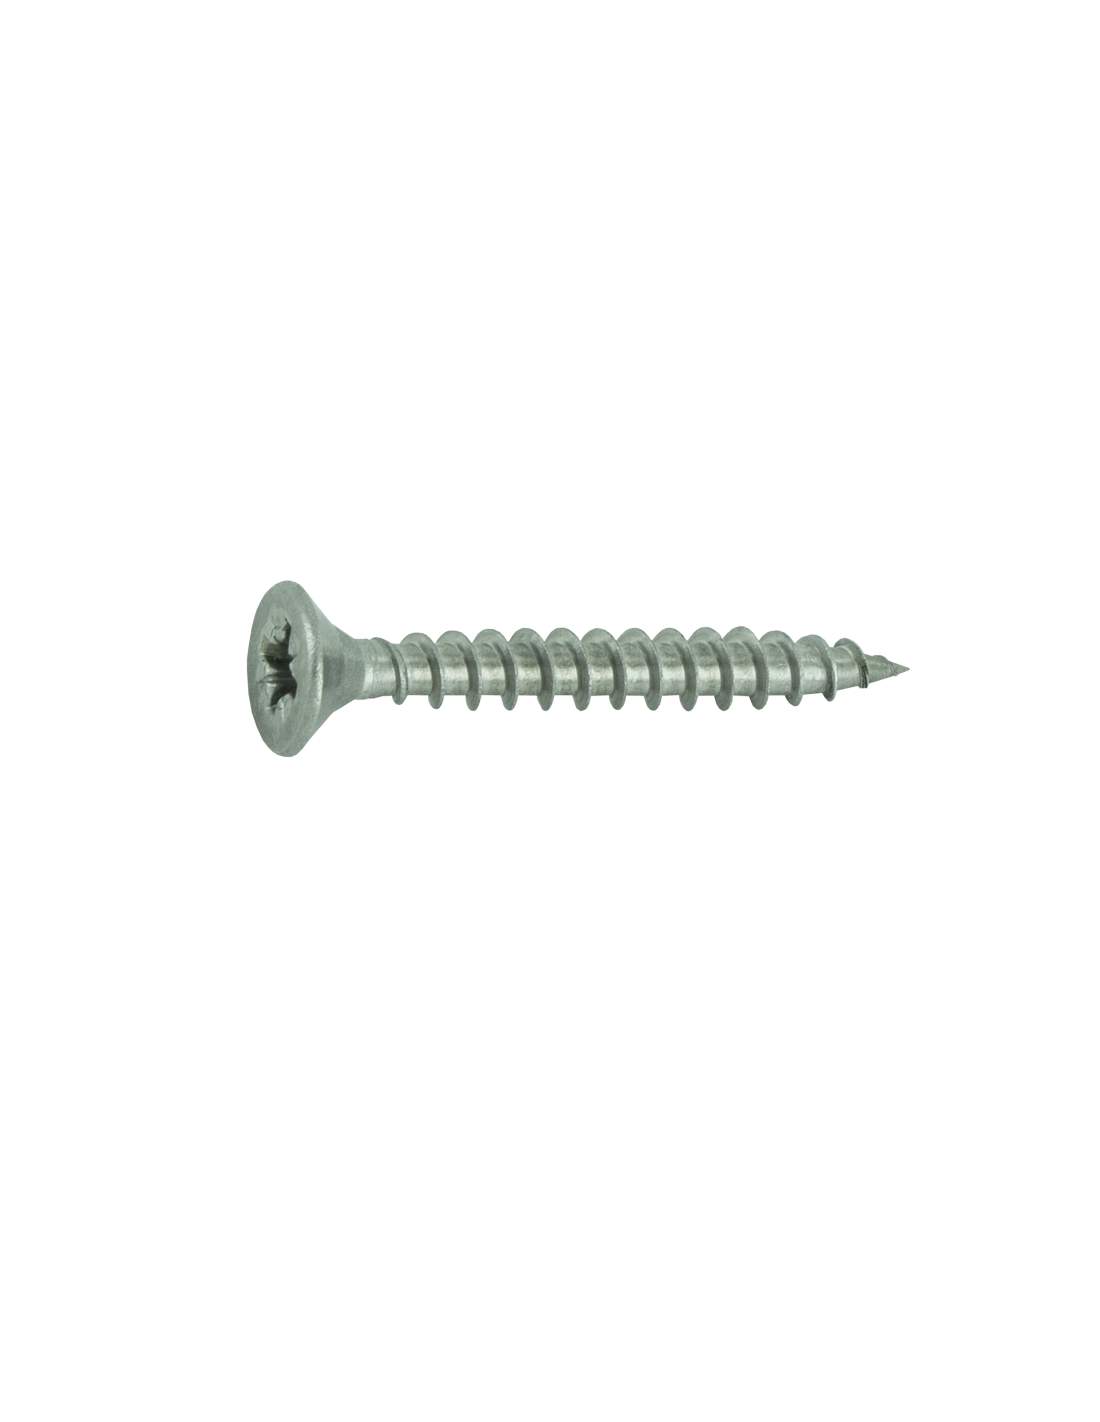 Pozidriv stainless steel A2 4x20 countersunk screws, 29 pcs.